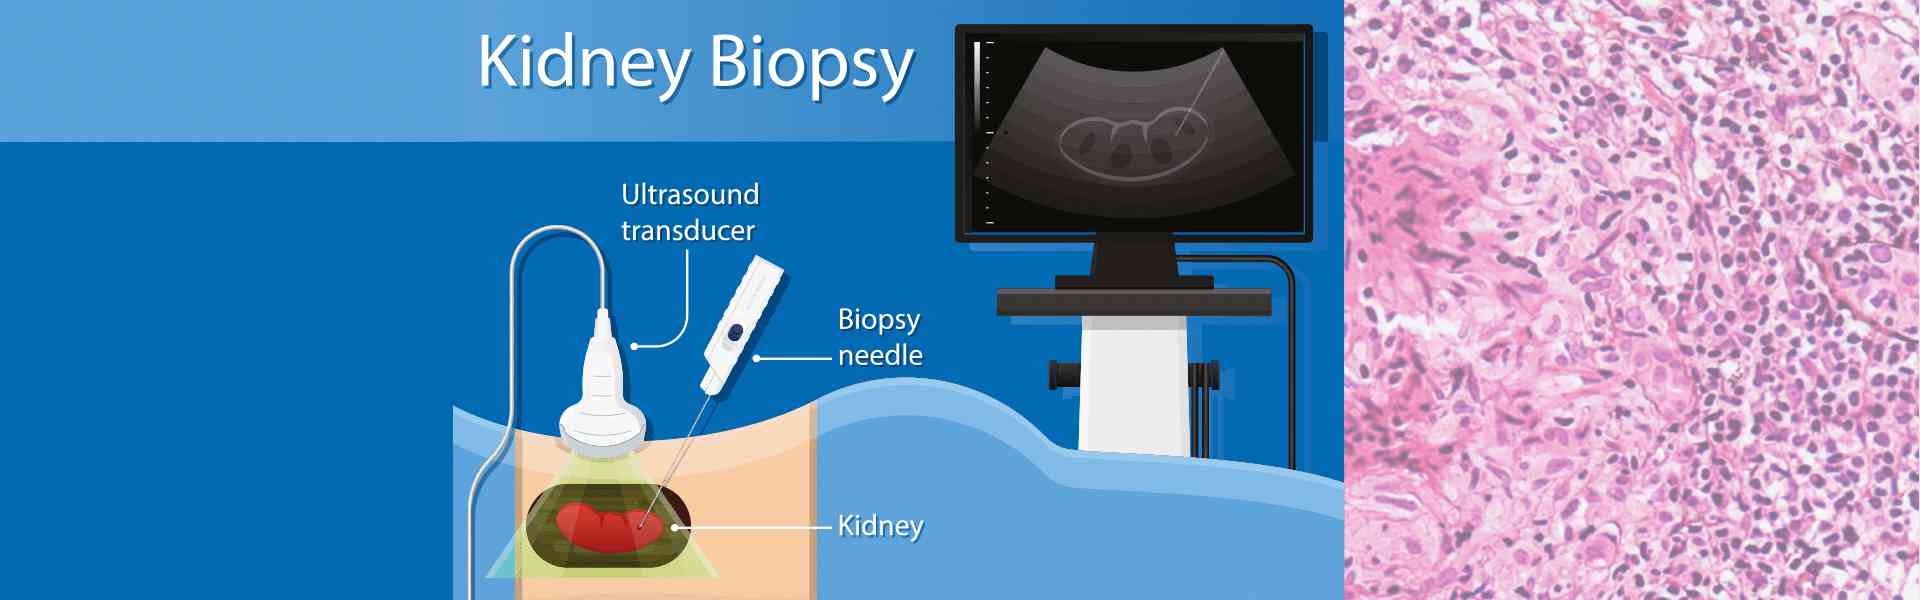 Kidney Biopsy Treatment in Kharadi Pune